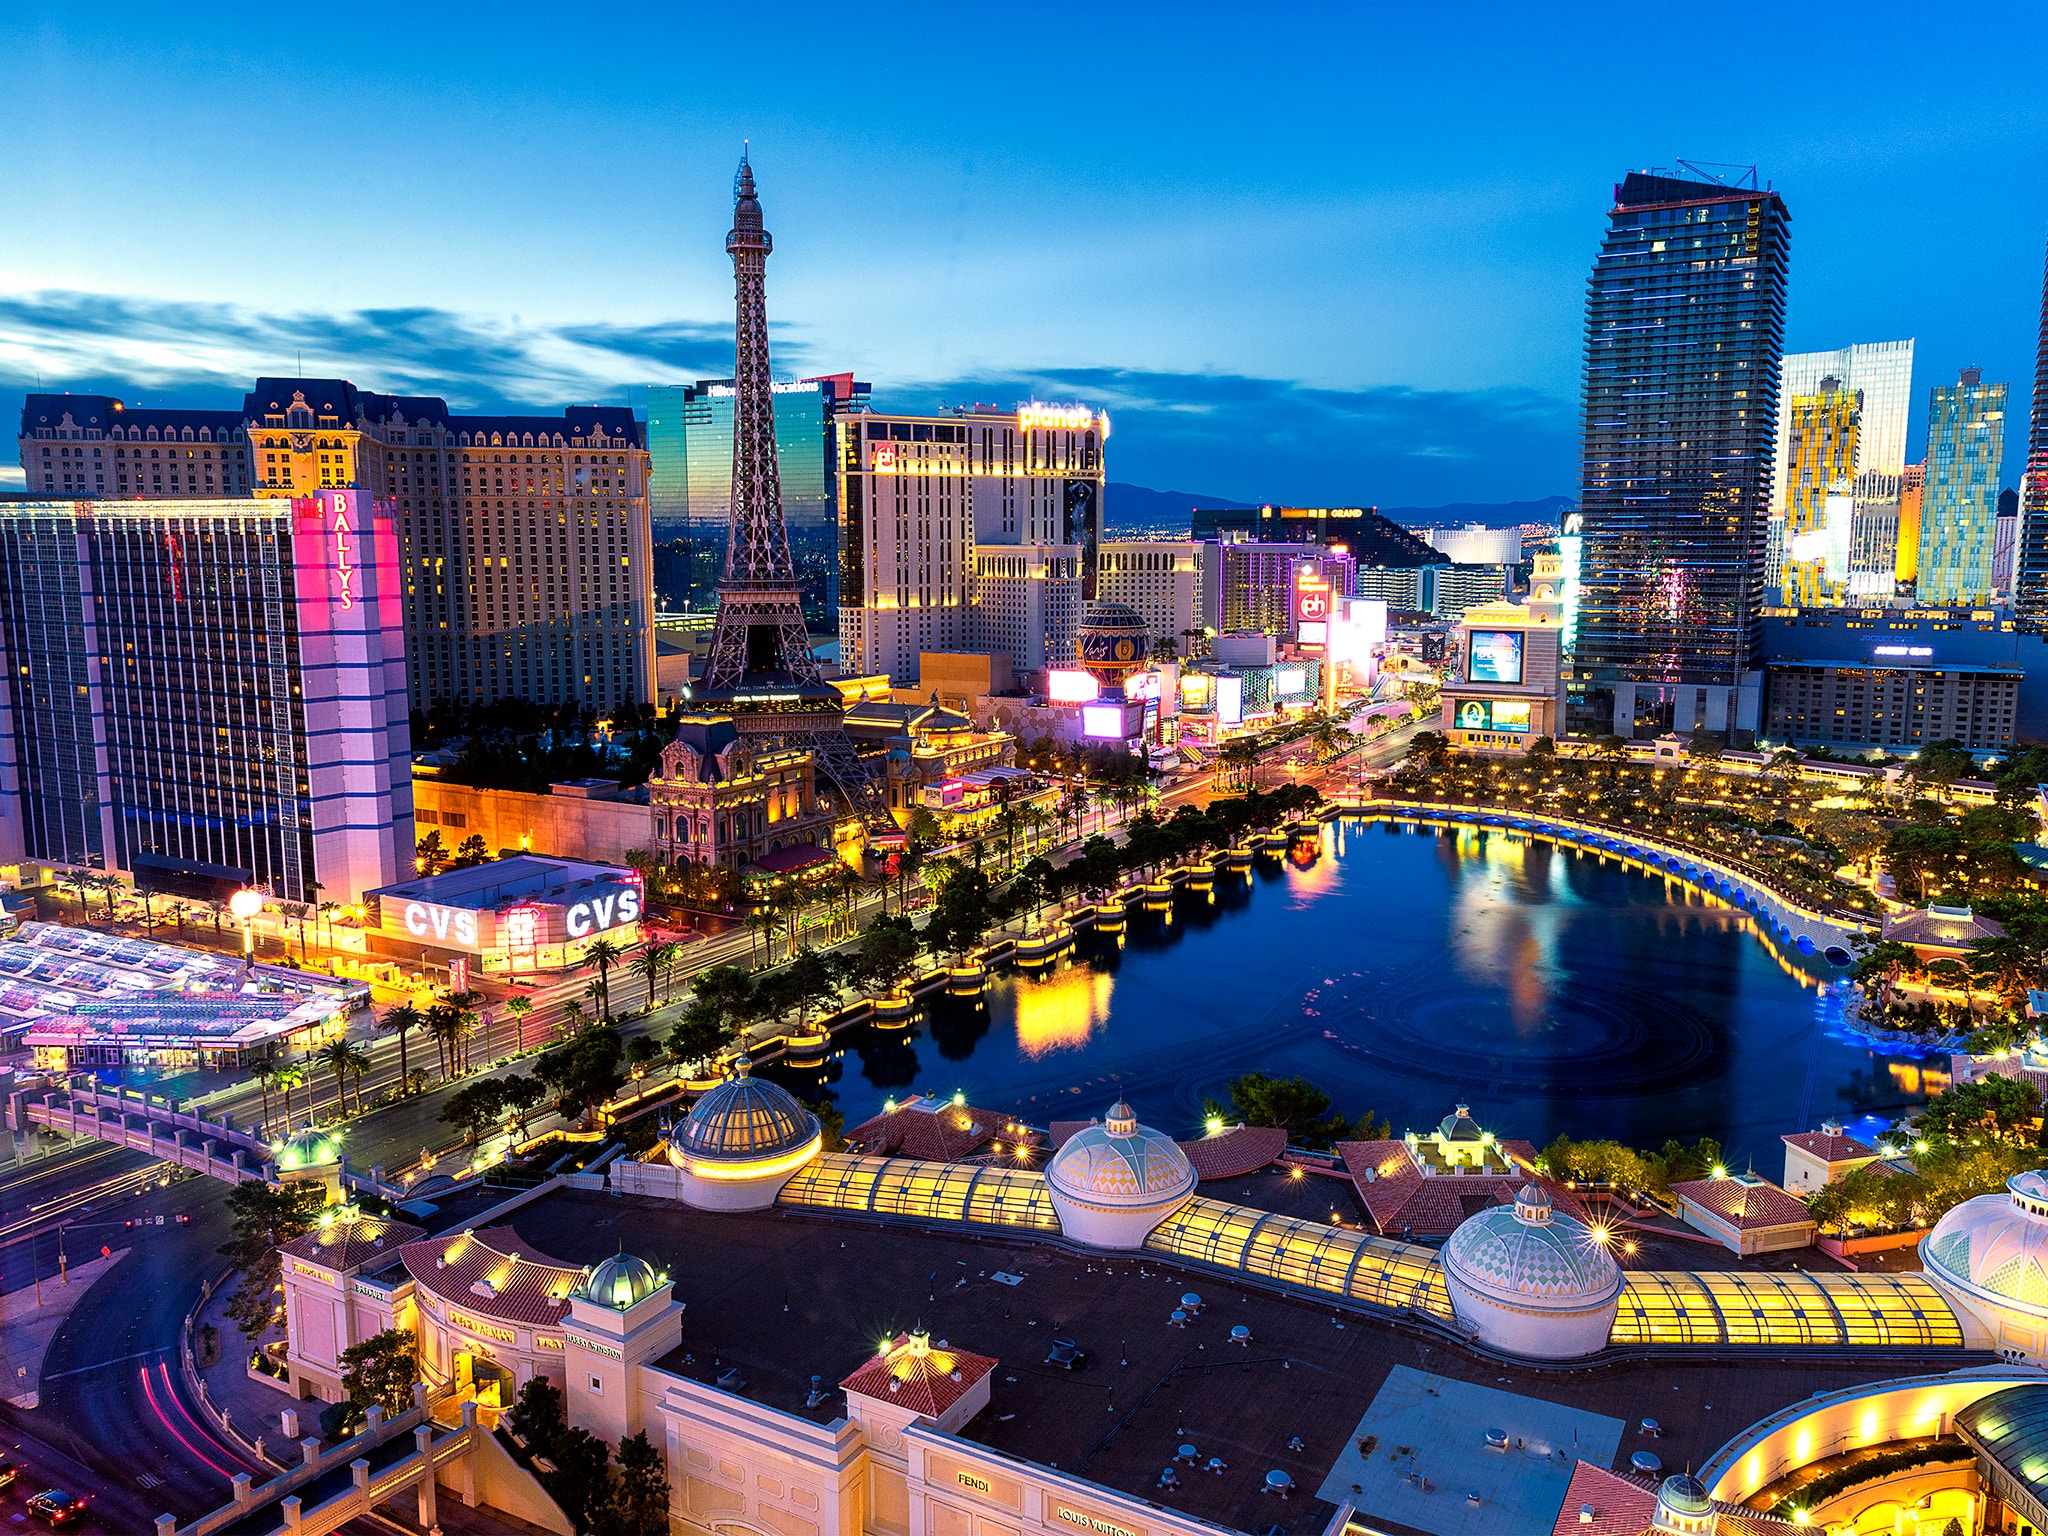 America's New Eco Luxury HotSpot: The Las Vegas City Center